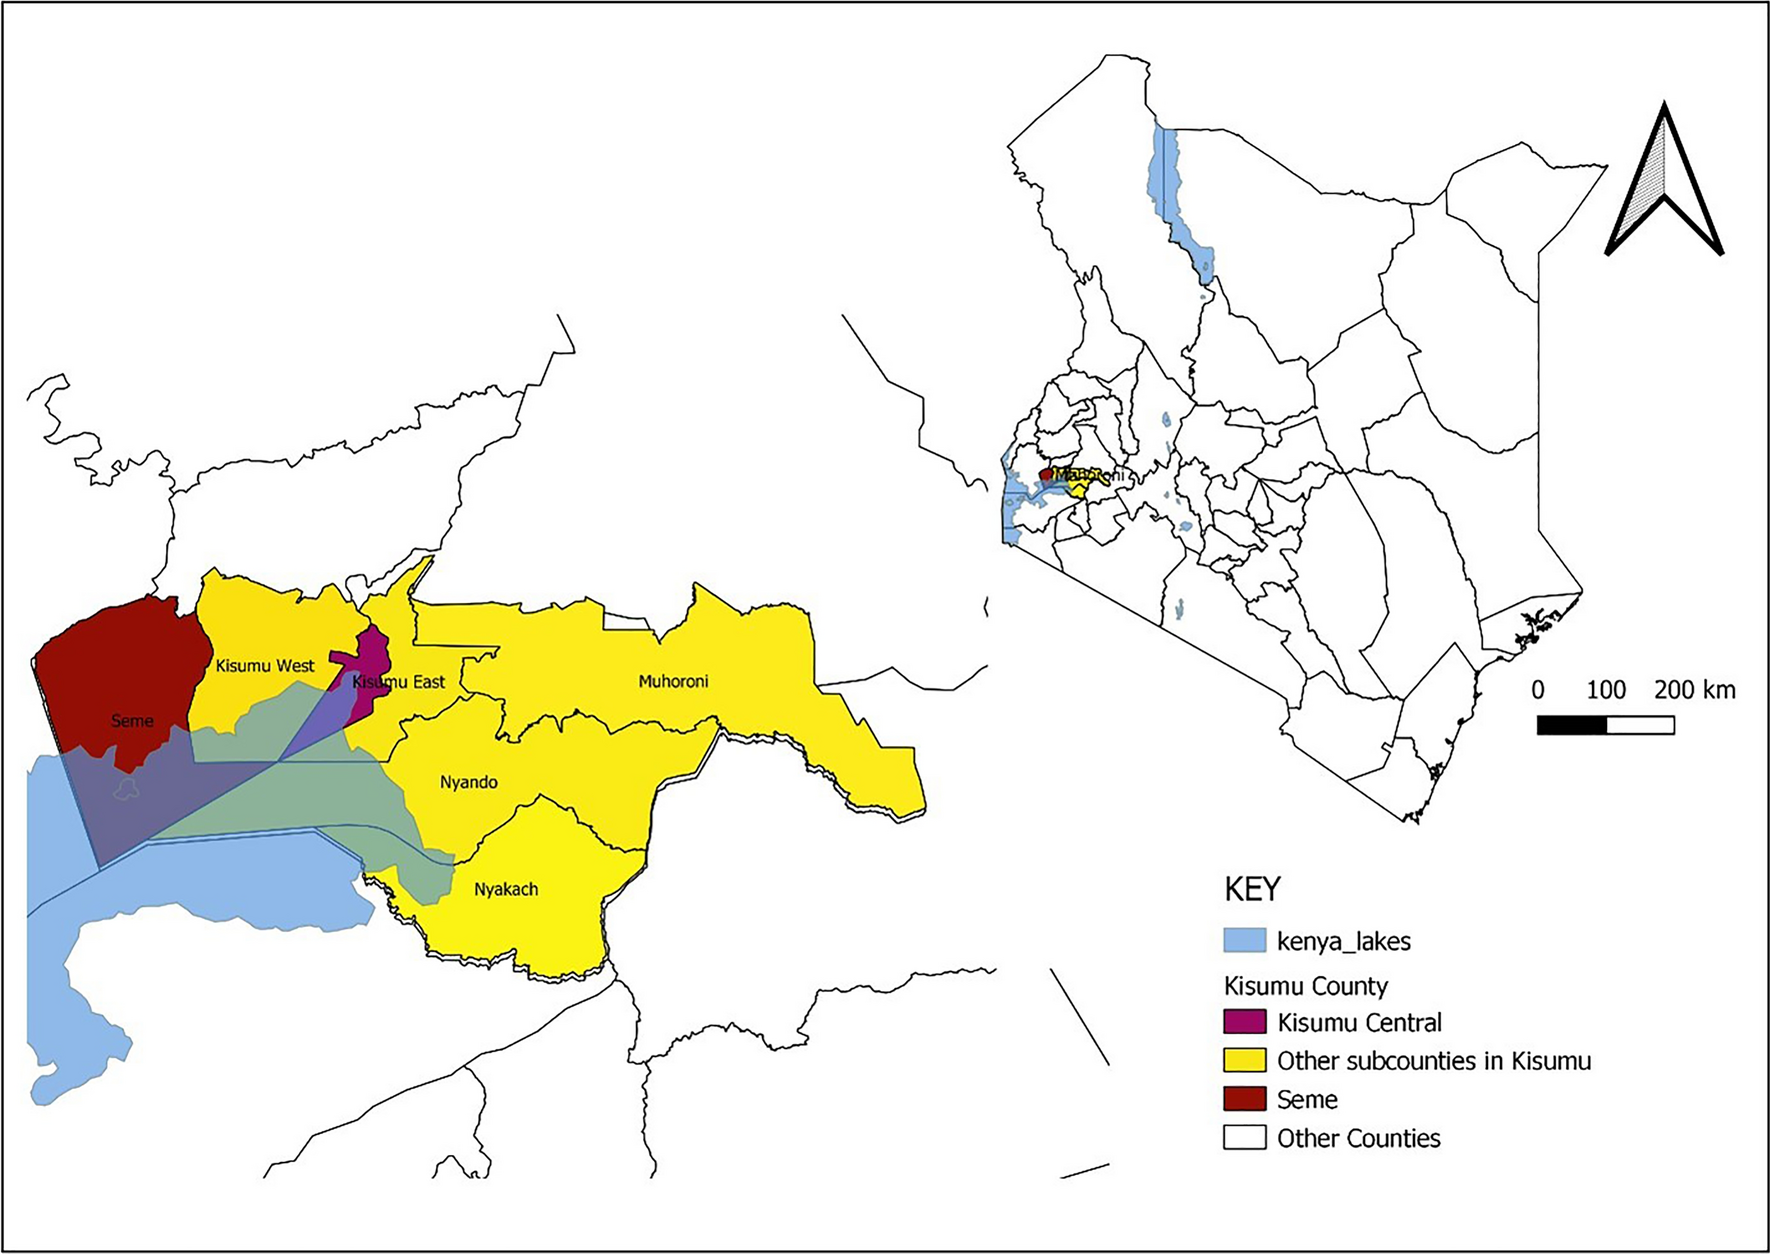 Fig. 2: Map of Kisumu County, Kenya, showing the study sites